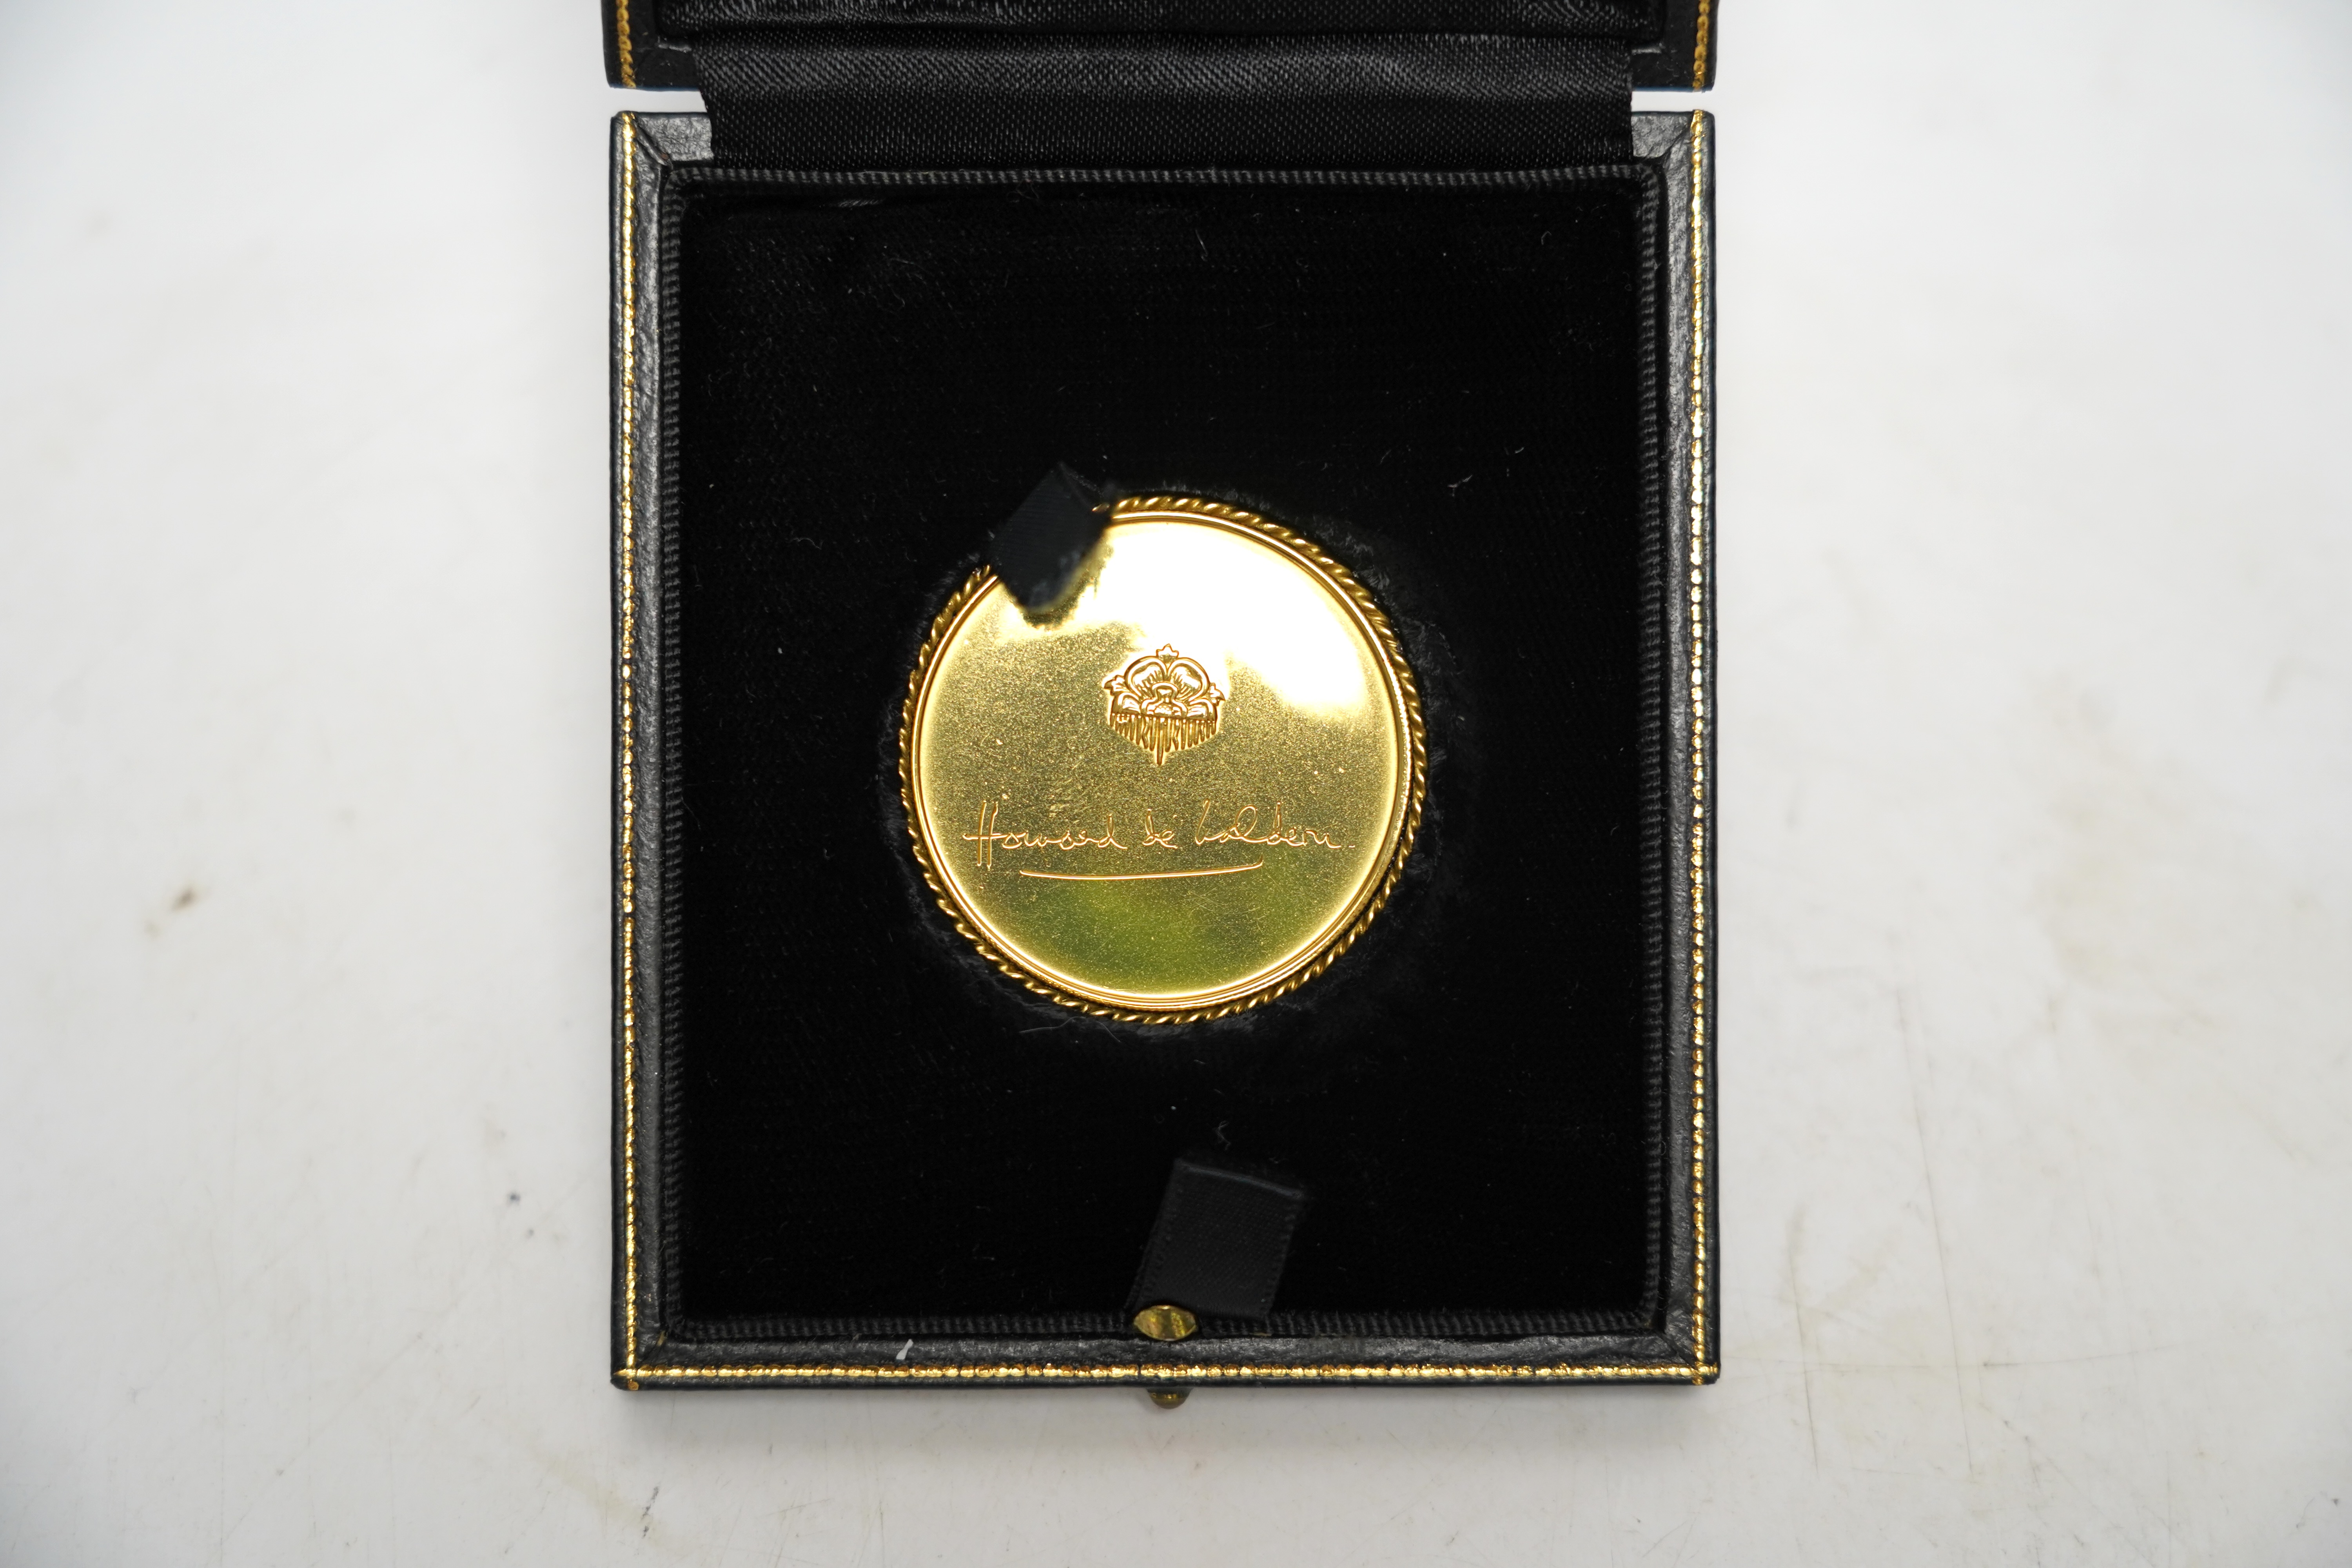 A Lord Howard de Walden medal commemorating Slip Anchor, Derby, 1985, in Cartier box.